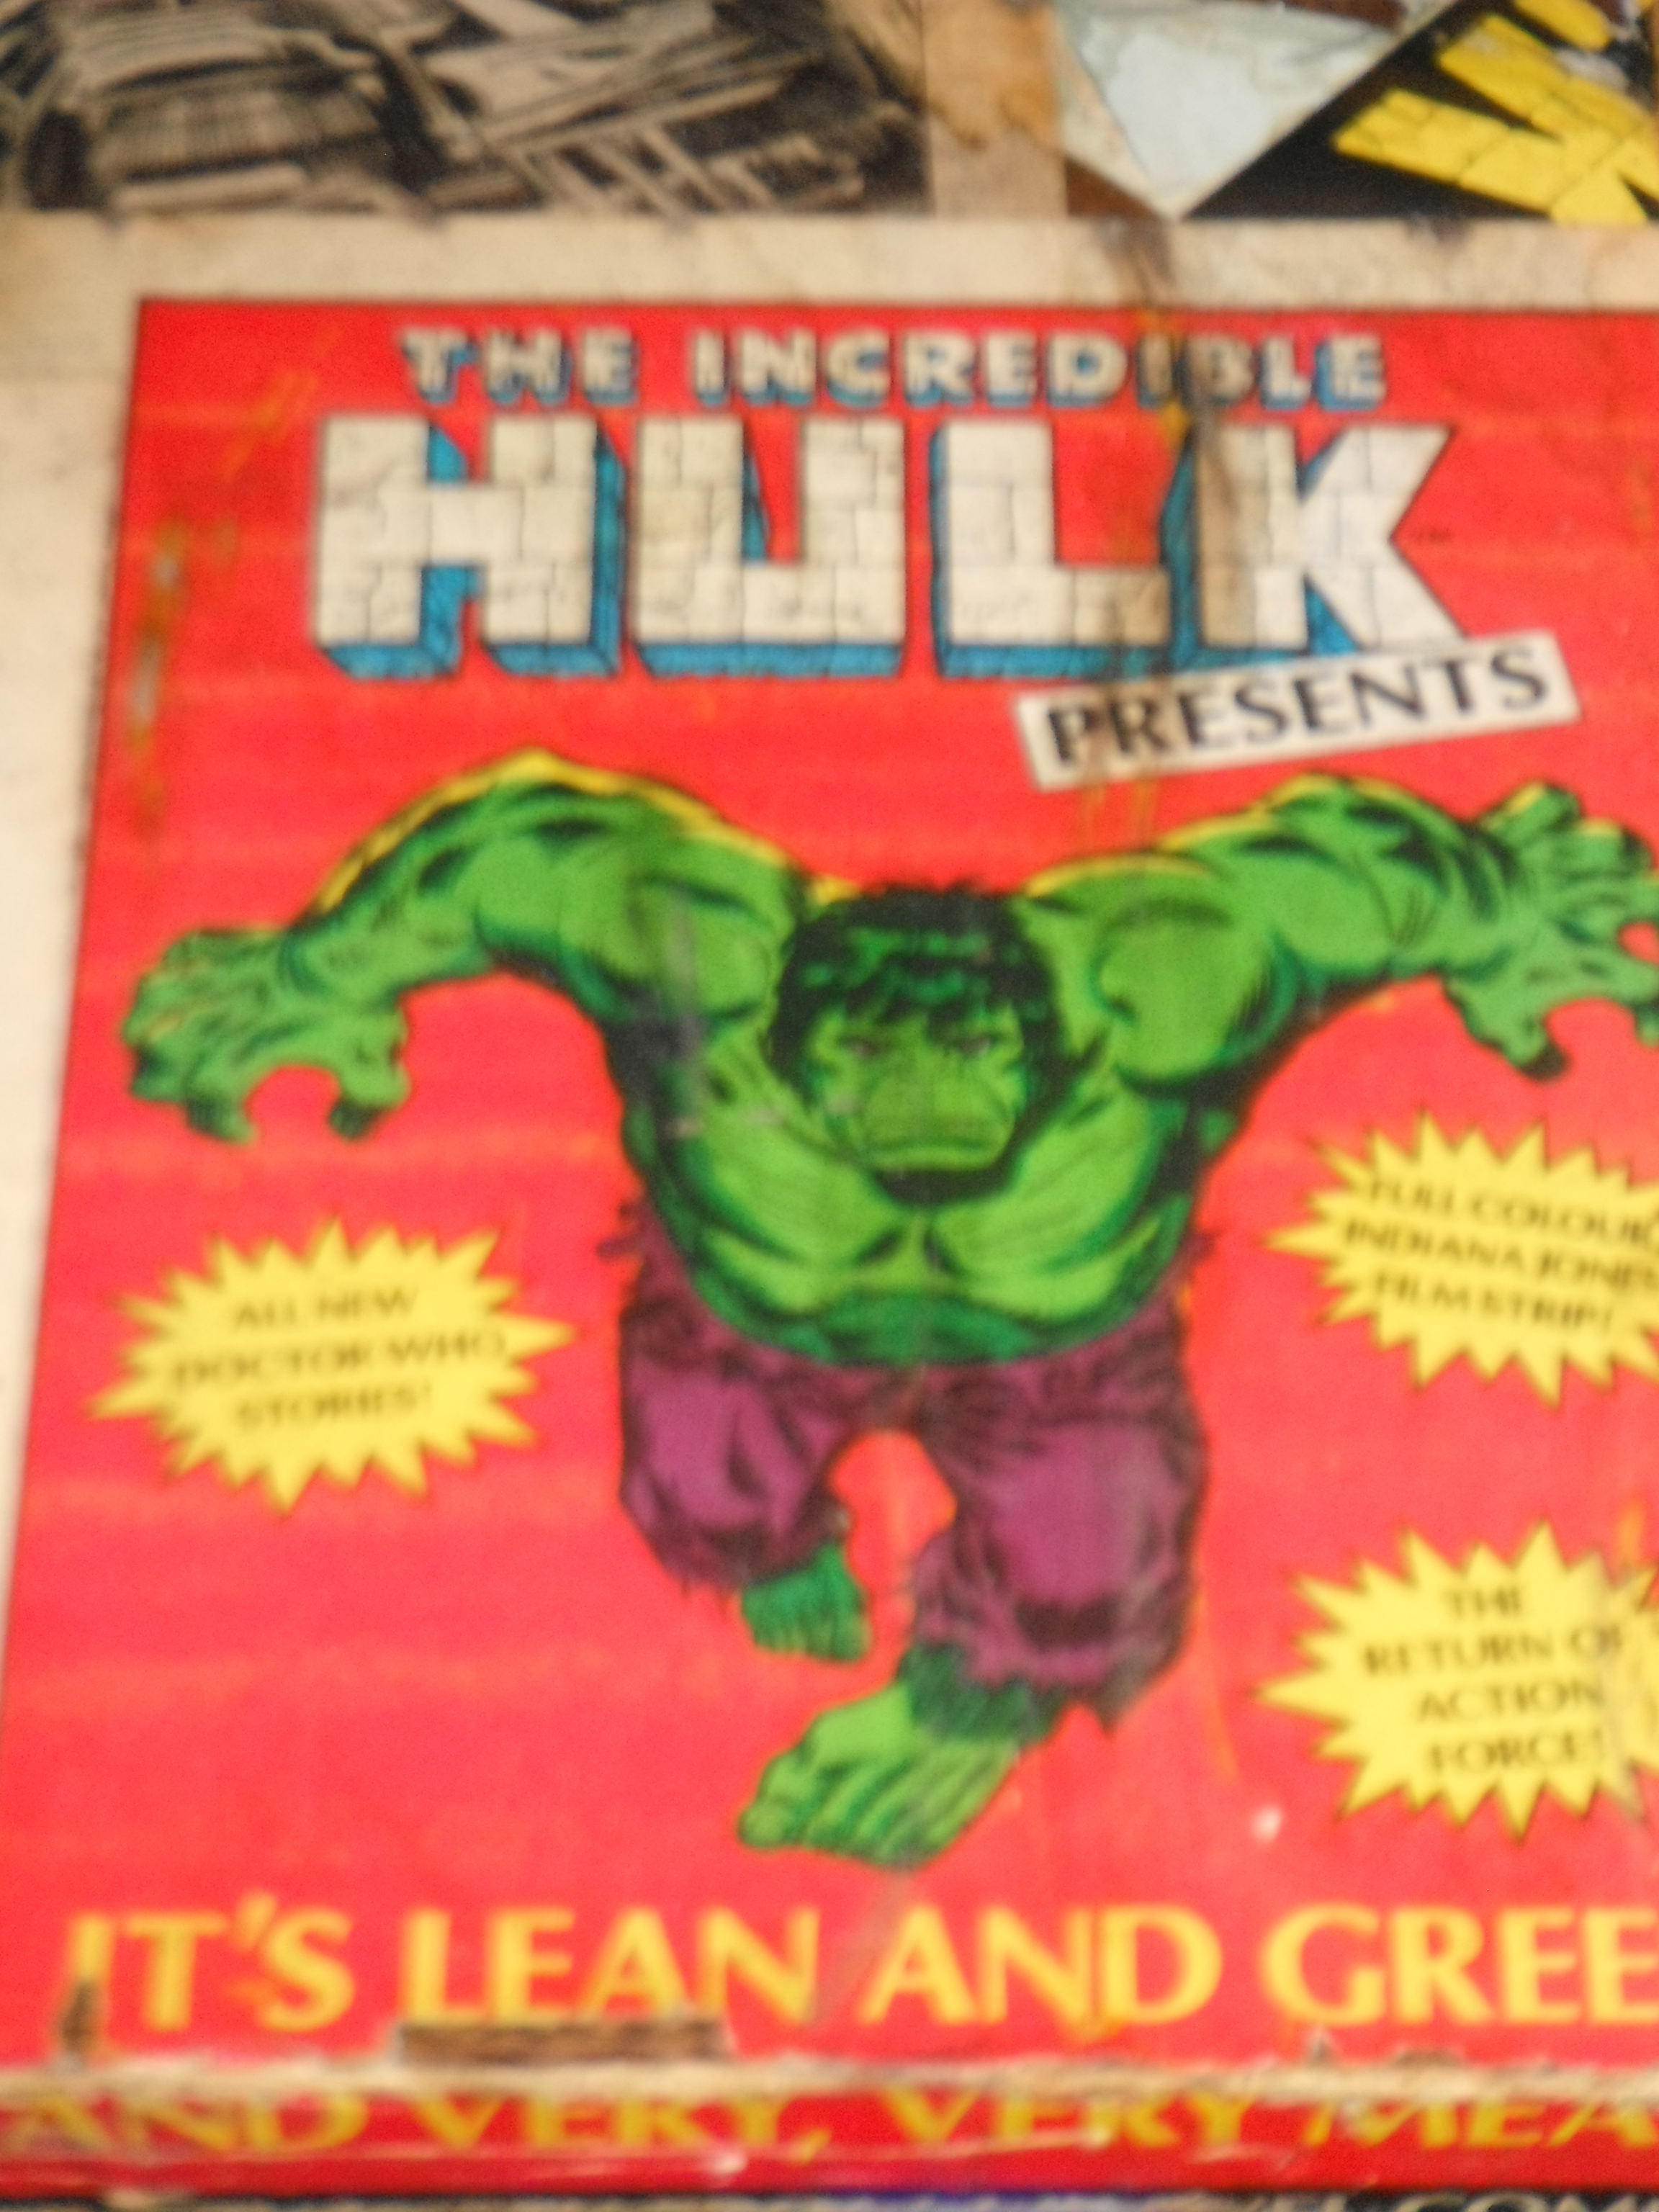 Photo taken by me – Hulk comic cover art, seen in FAB Café, Manchester